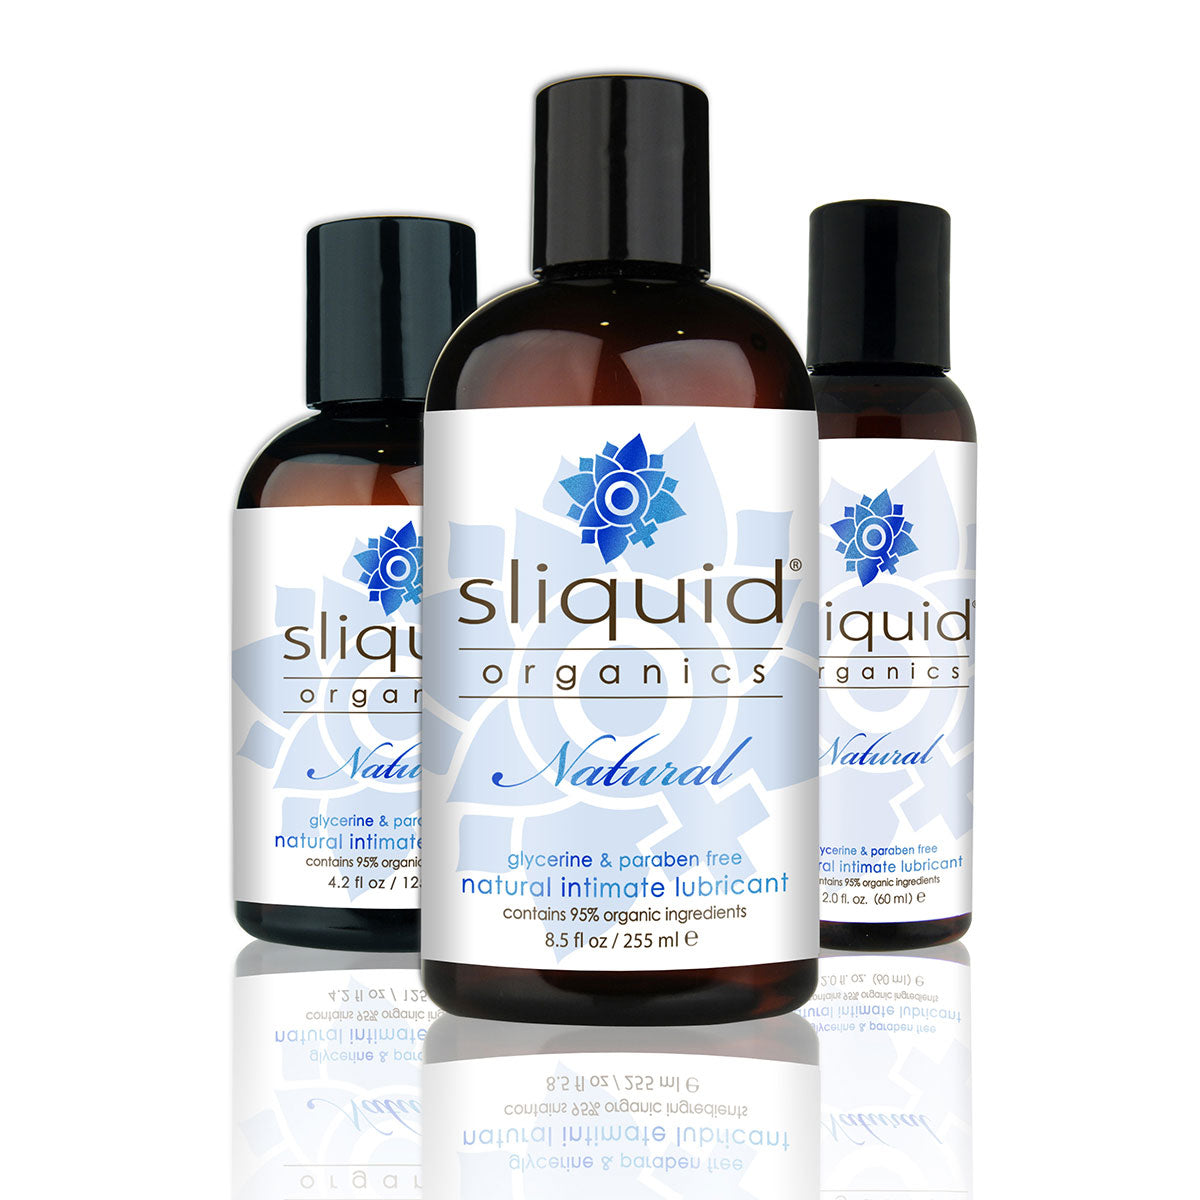 Sliquid Organics Natural - Cleanest Botanically Infused Water-Based Lubricant - 4.2oz